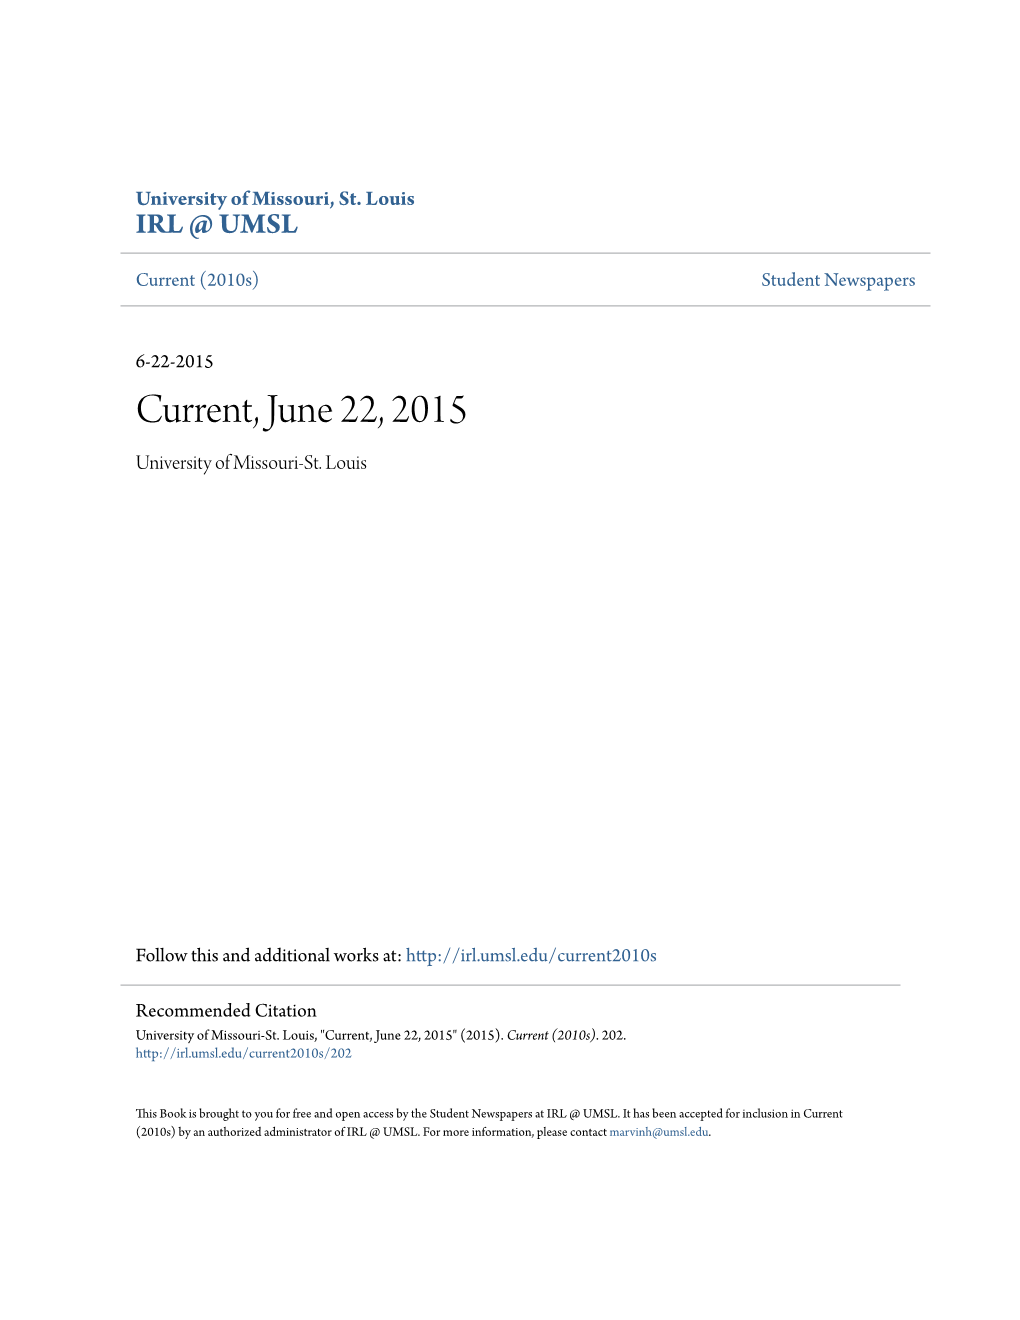 Current, June 22, 2015 University of Missouri-St